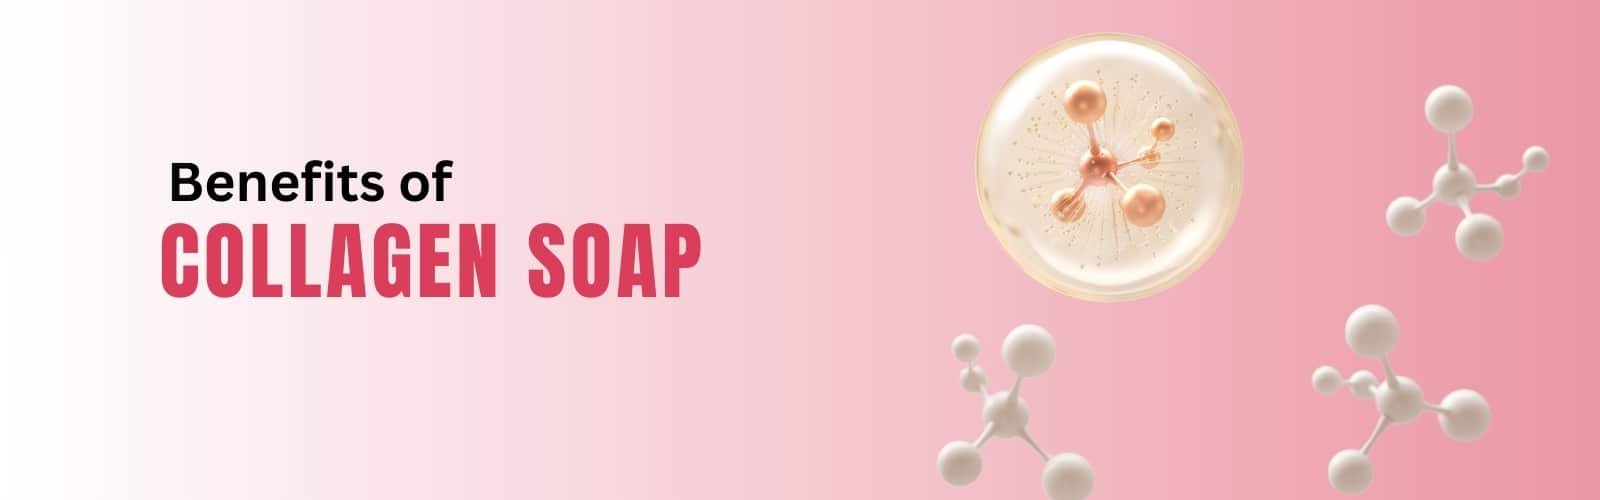 Benefits of Collagen Soap